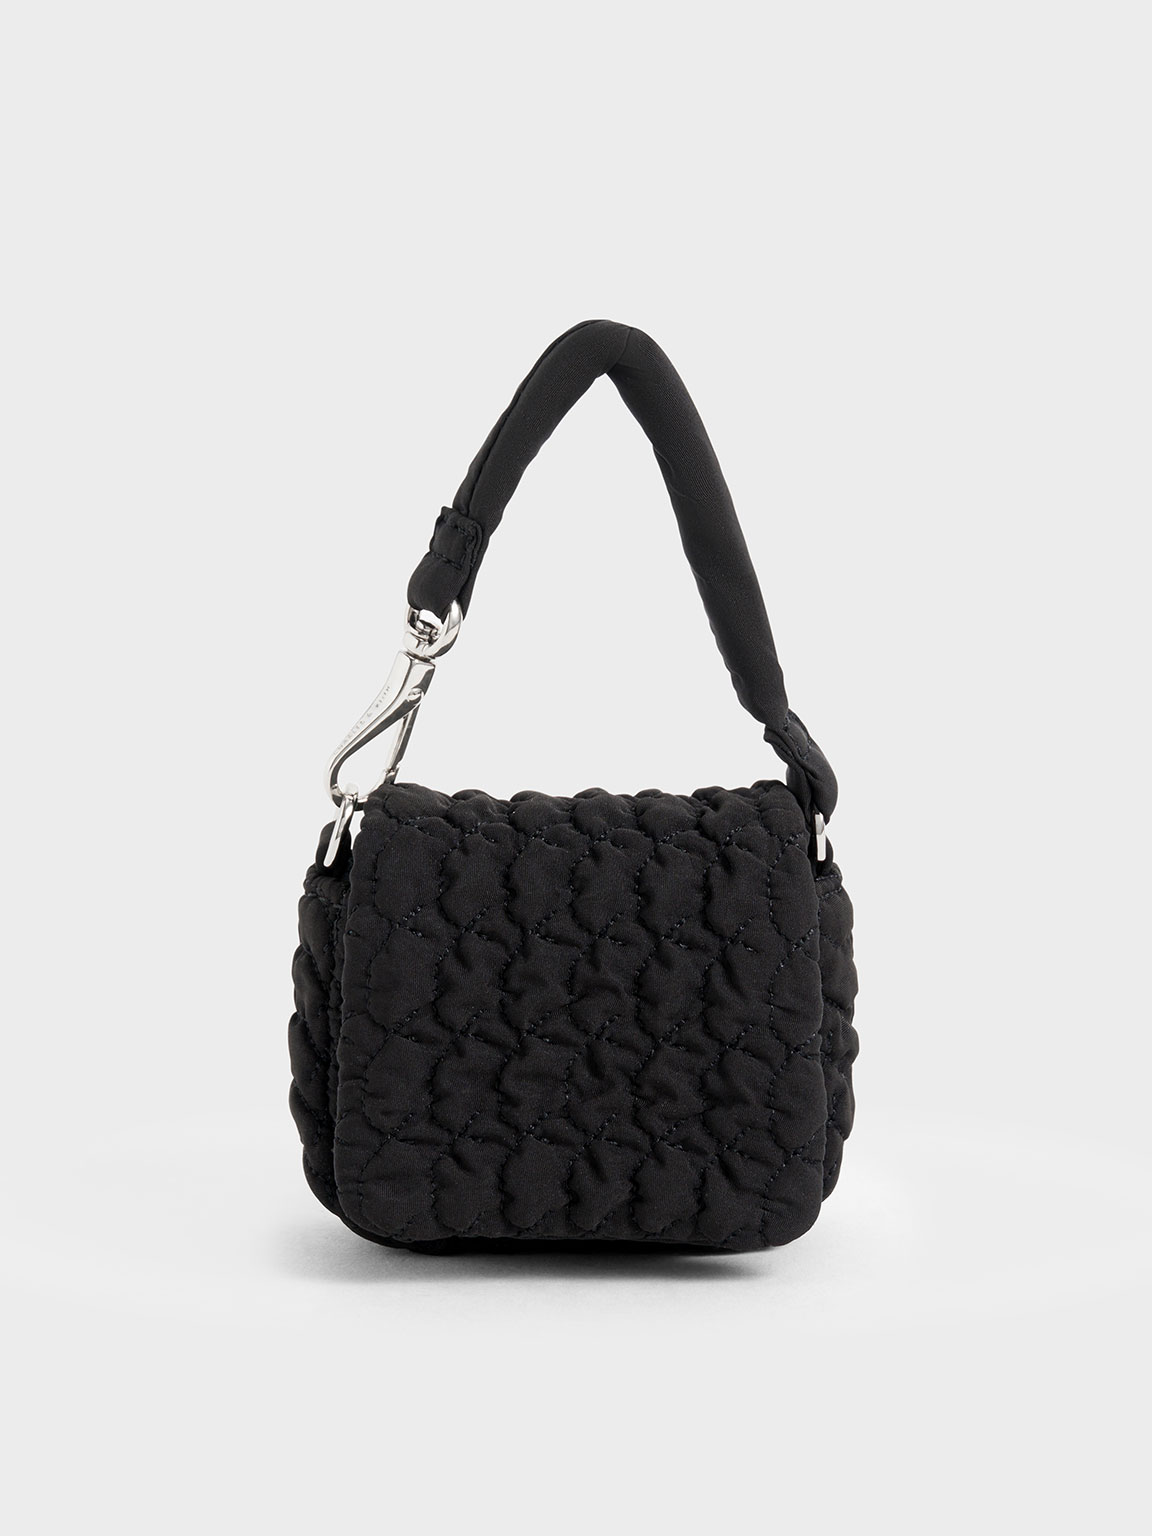 Clutch Purse Handbags, Small Nylon Handbag